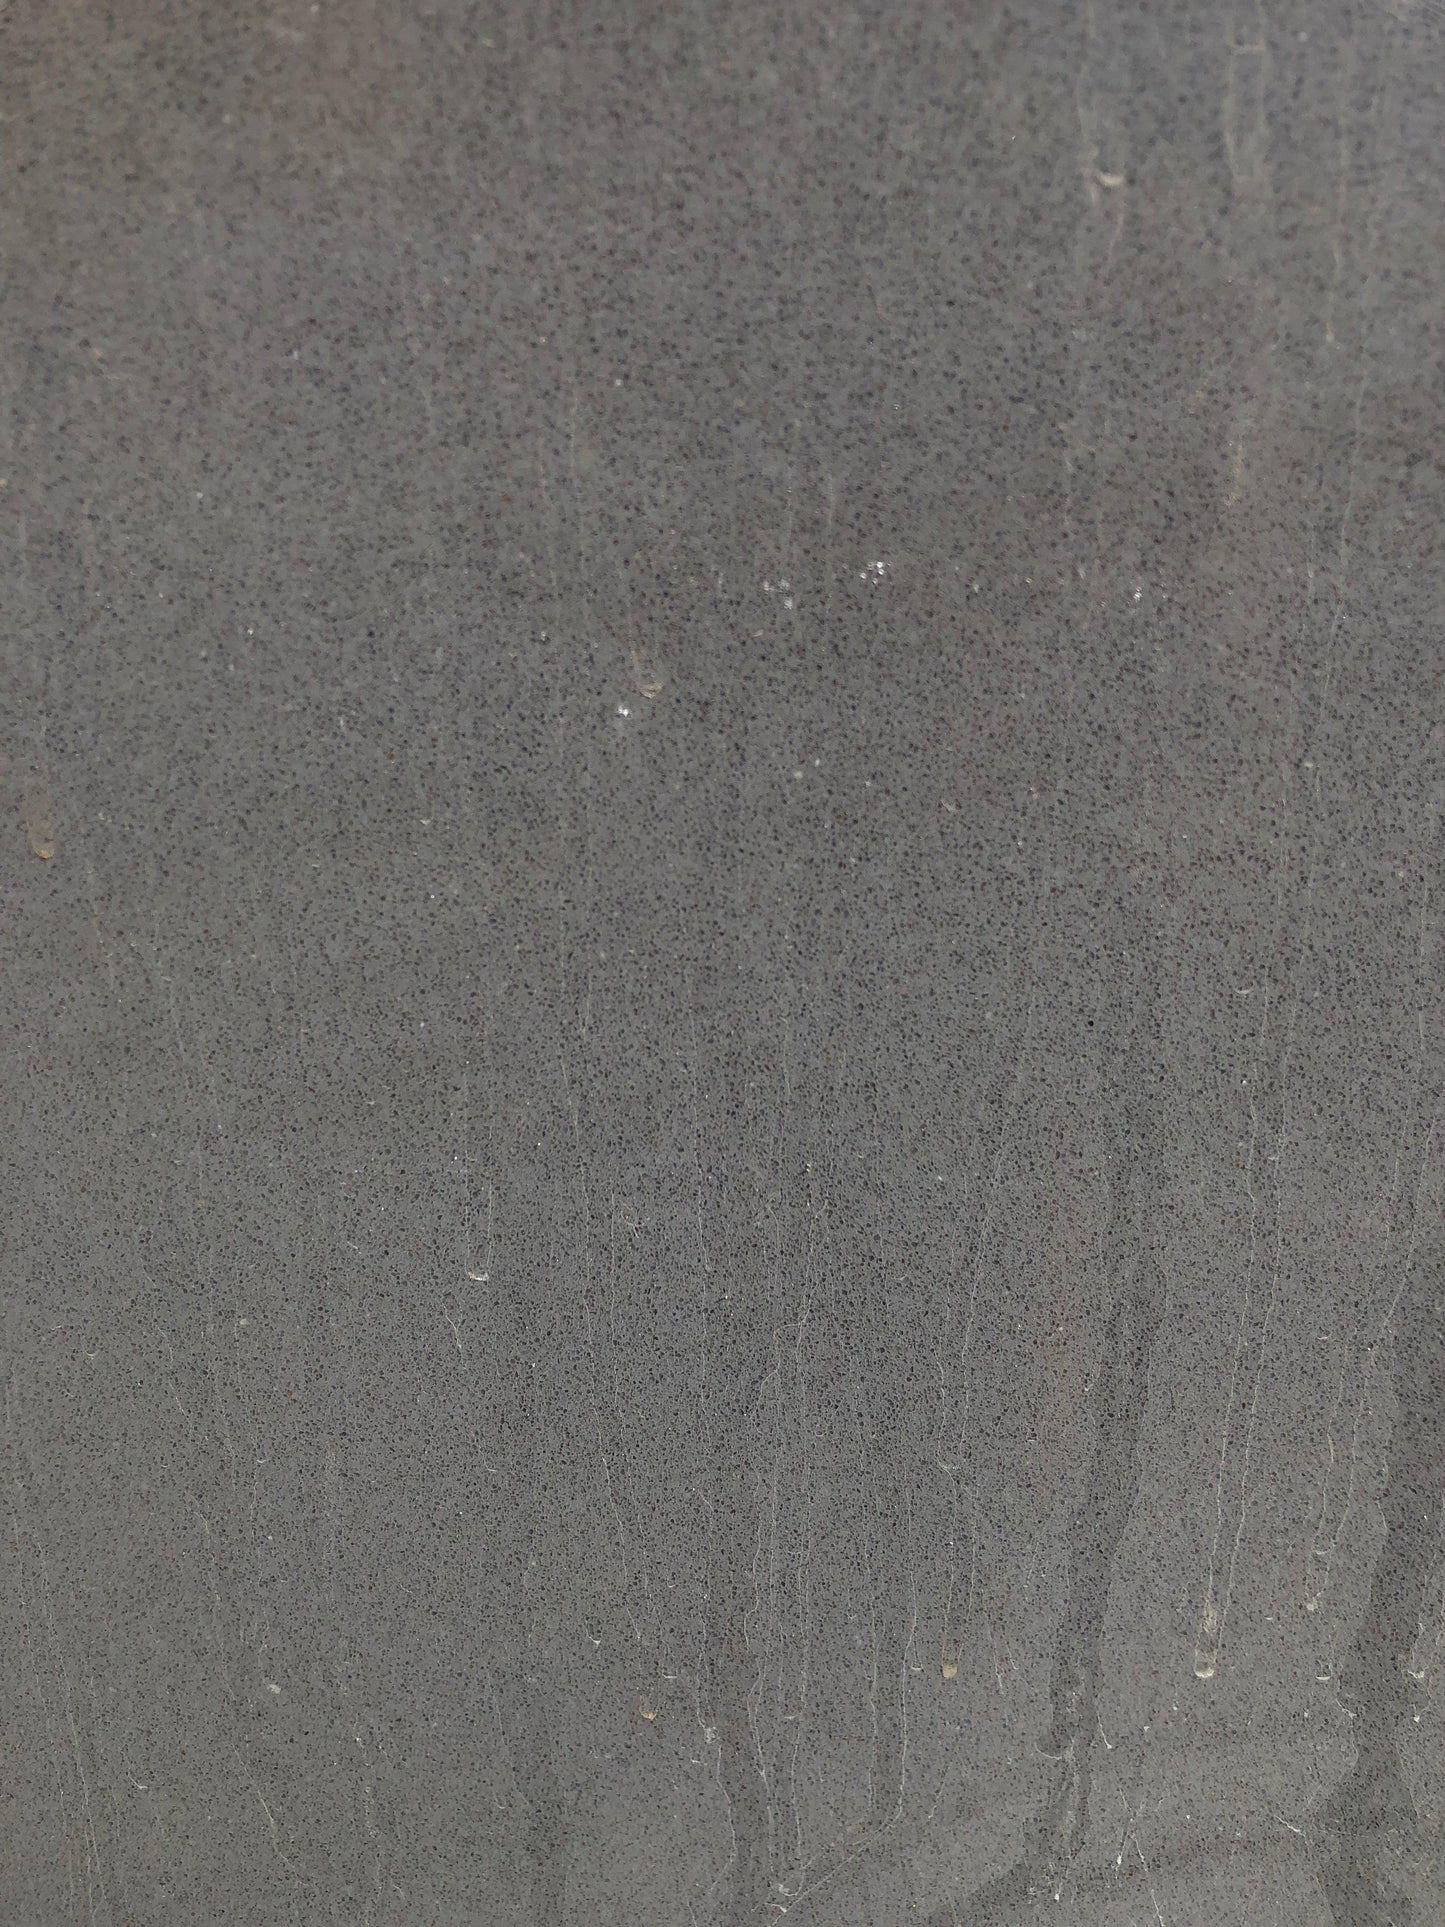 3cm, black, Glossy, gray, Grey, Remnant Quartz Remnants